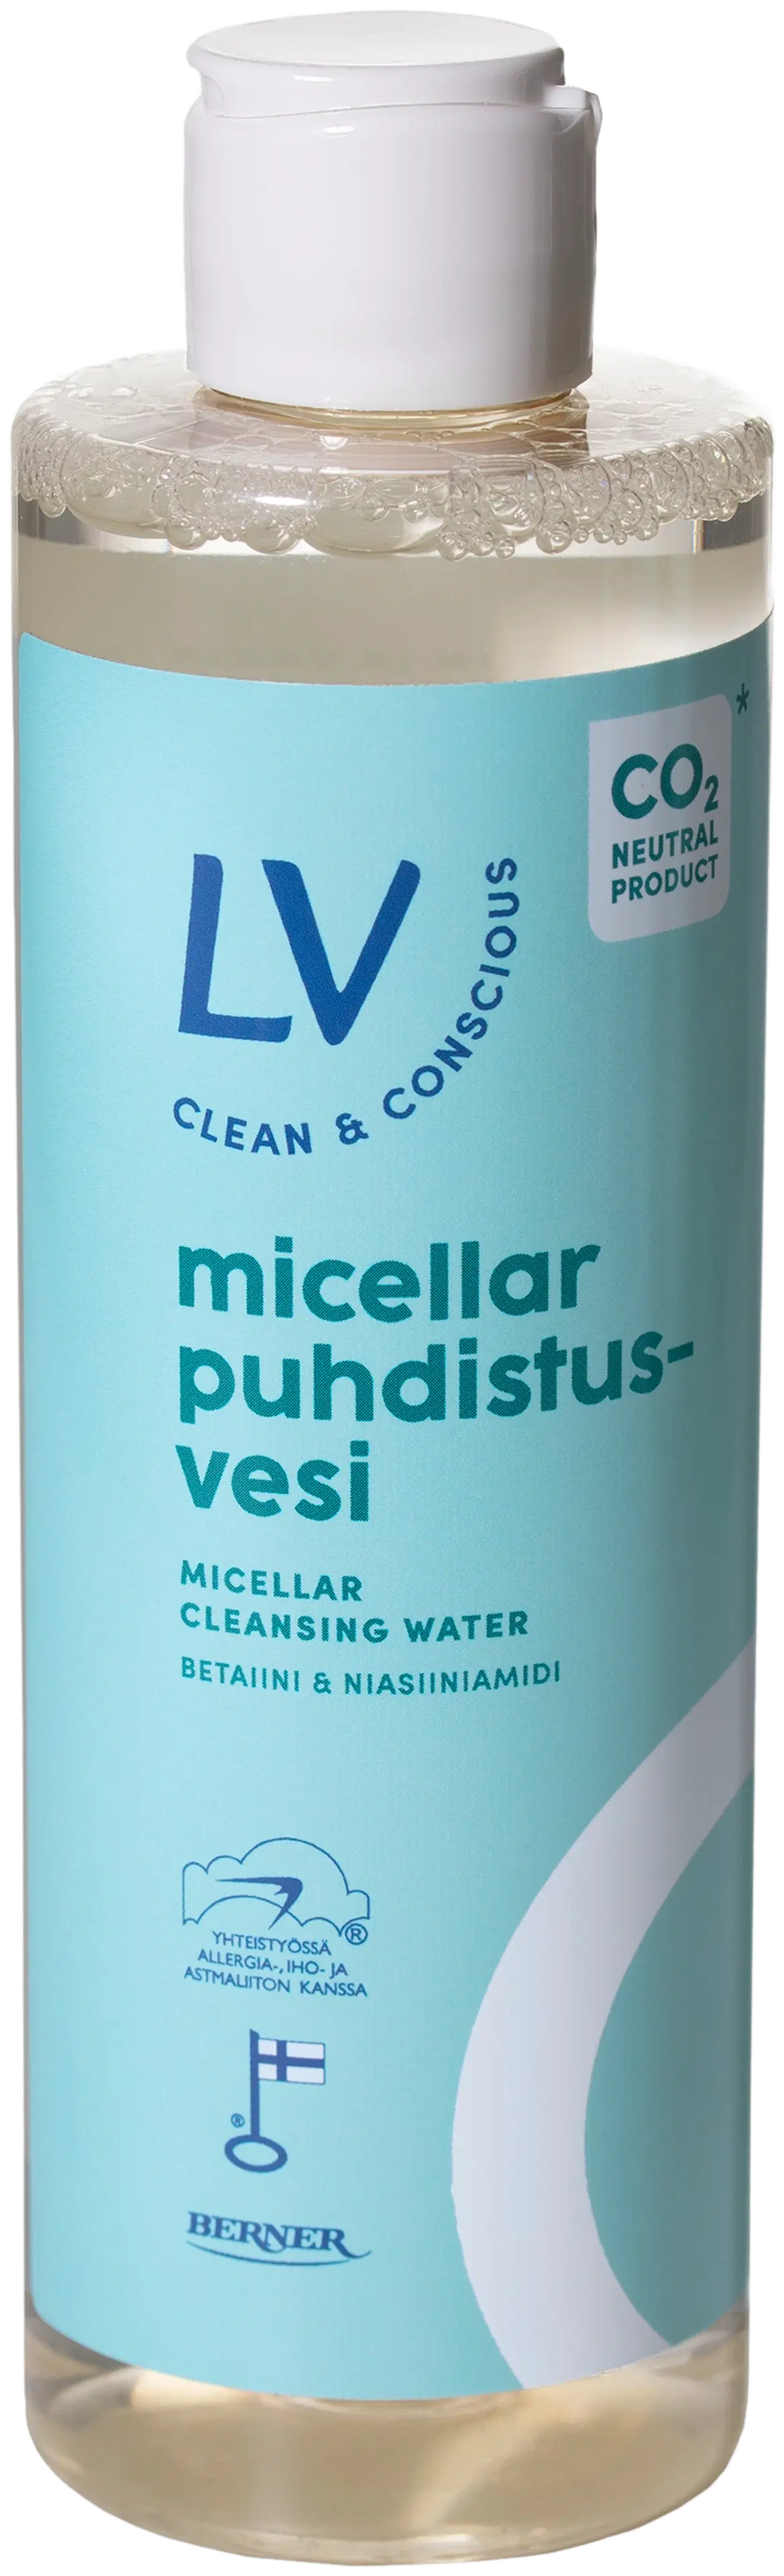 LV 250ml Micellar puhdistusvesi